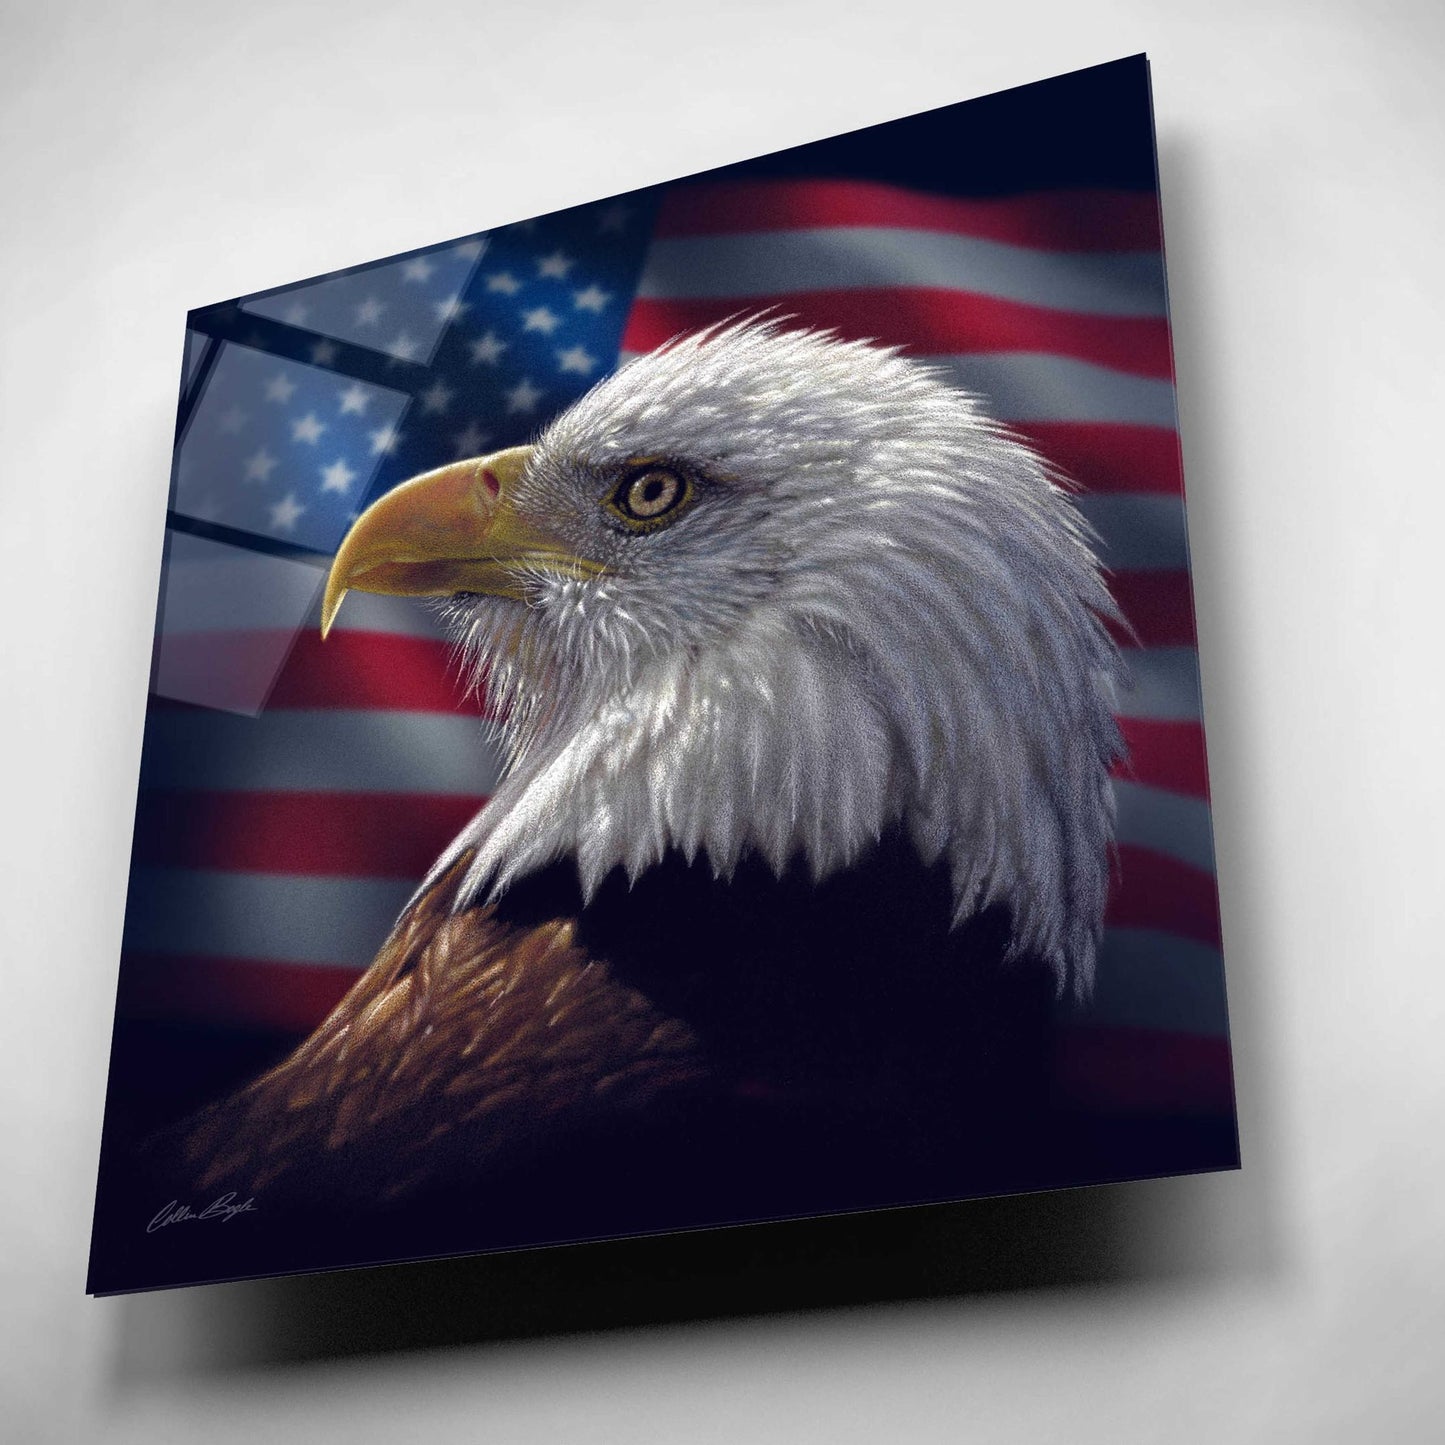 Epic Art 'American Bald Eagle' by Collin Bogle Acrylic Glass Wall Art,12x12